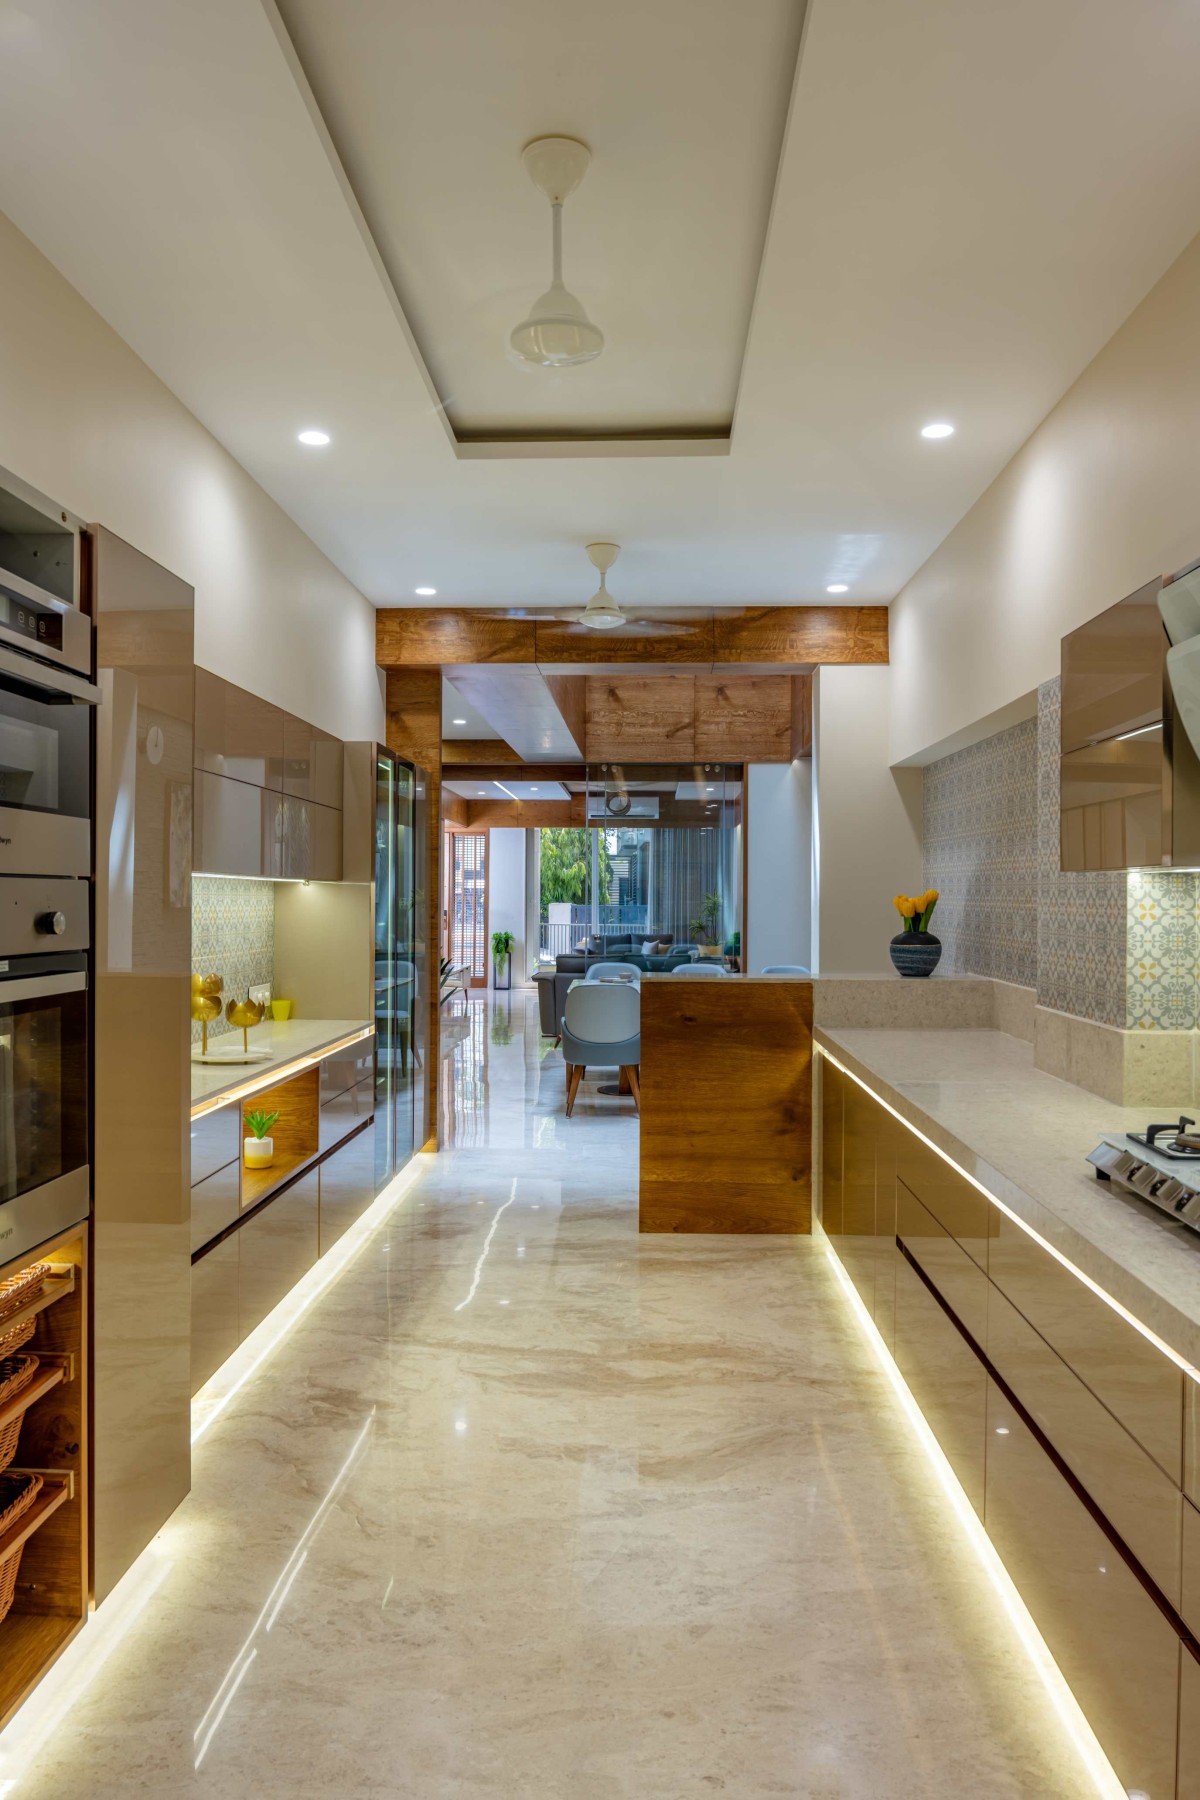 Kitchen of Narrow House by Prashant Parmar Architect